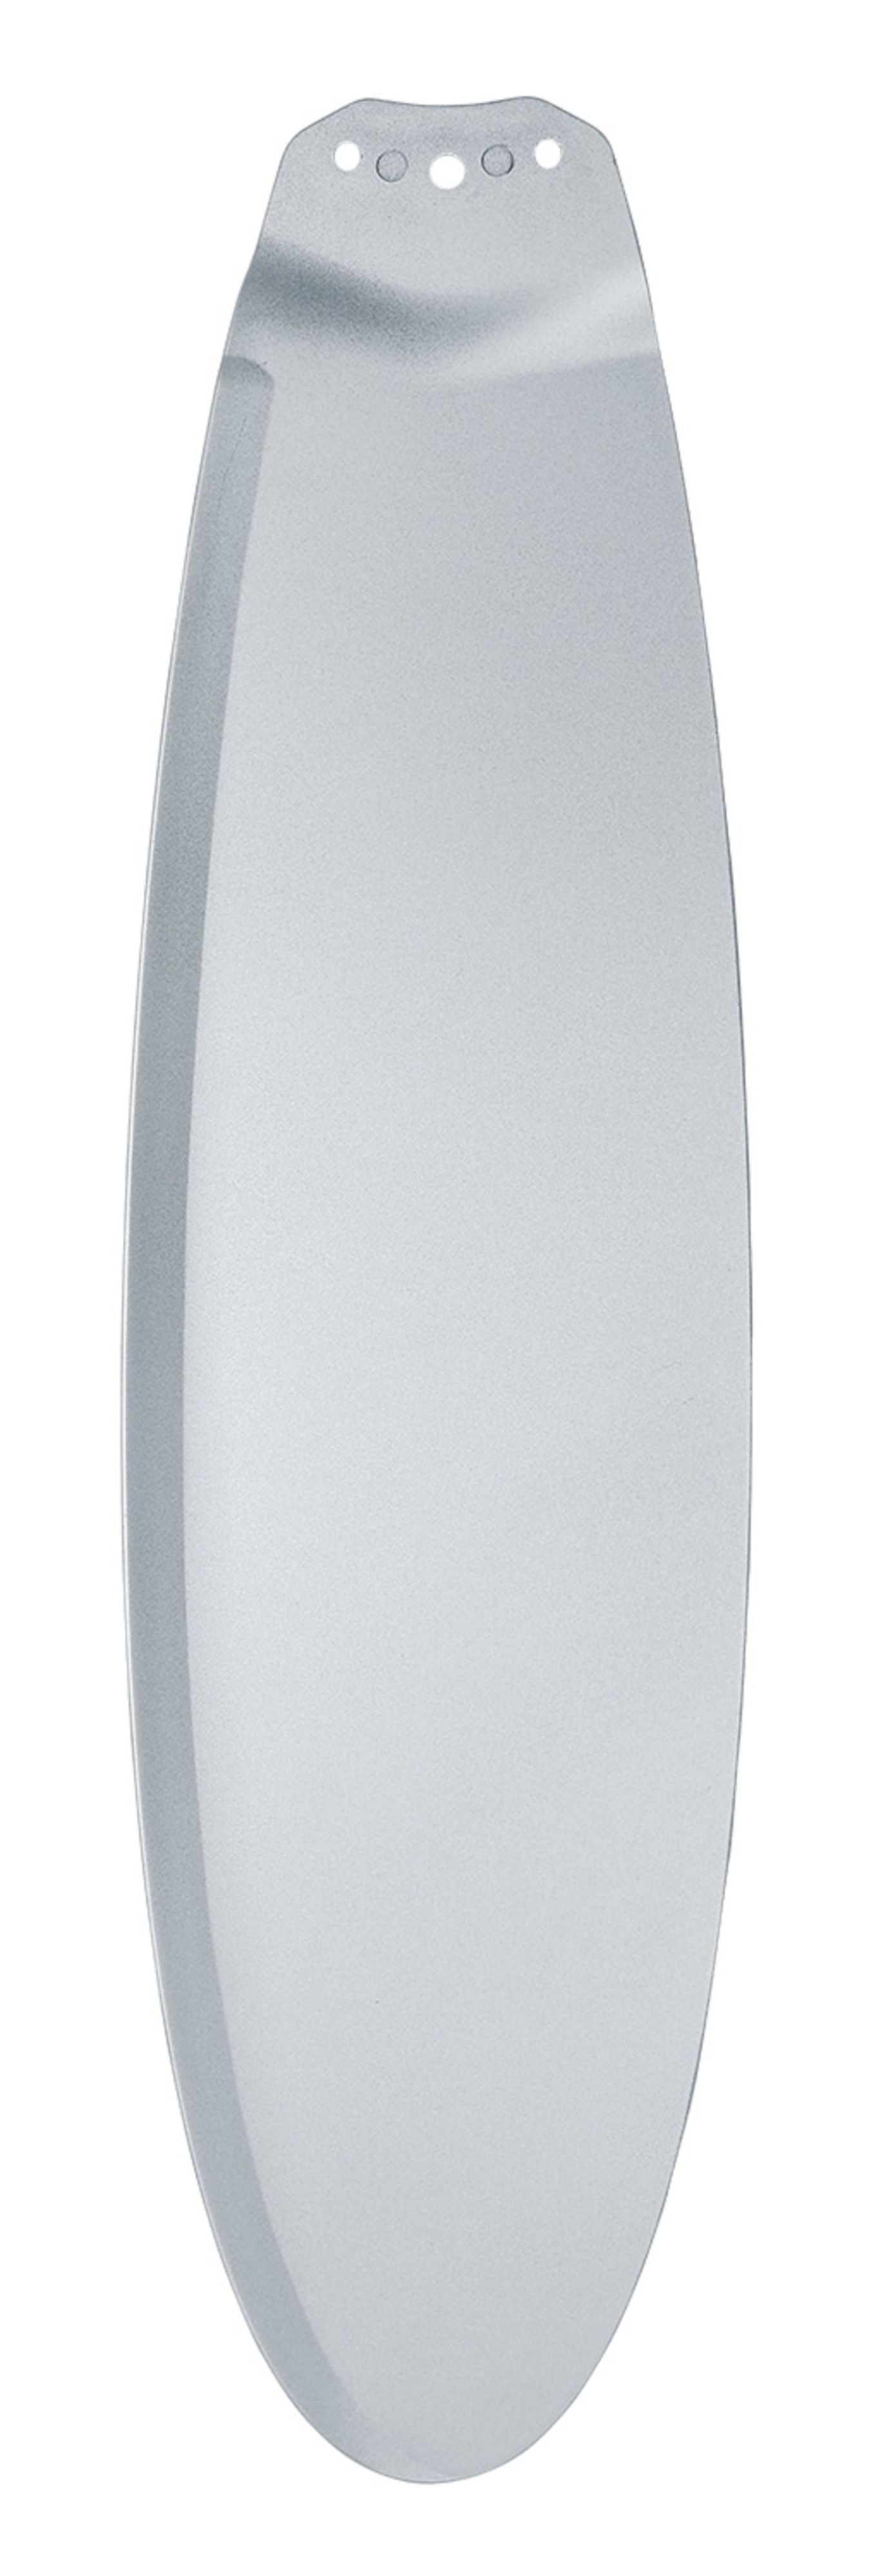 CASAFAN Eco Plano II LED Grau Silber (28 / Watt) Deckenventilator